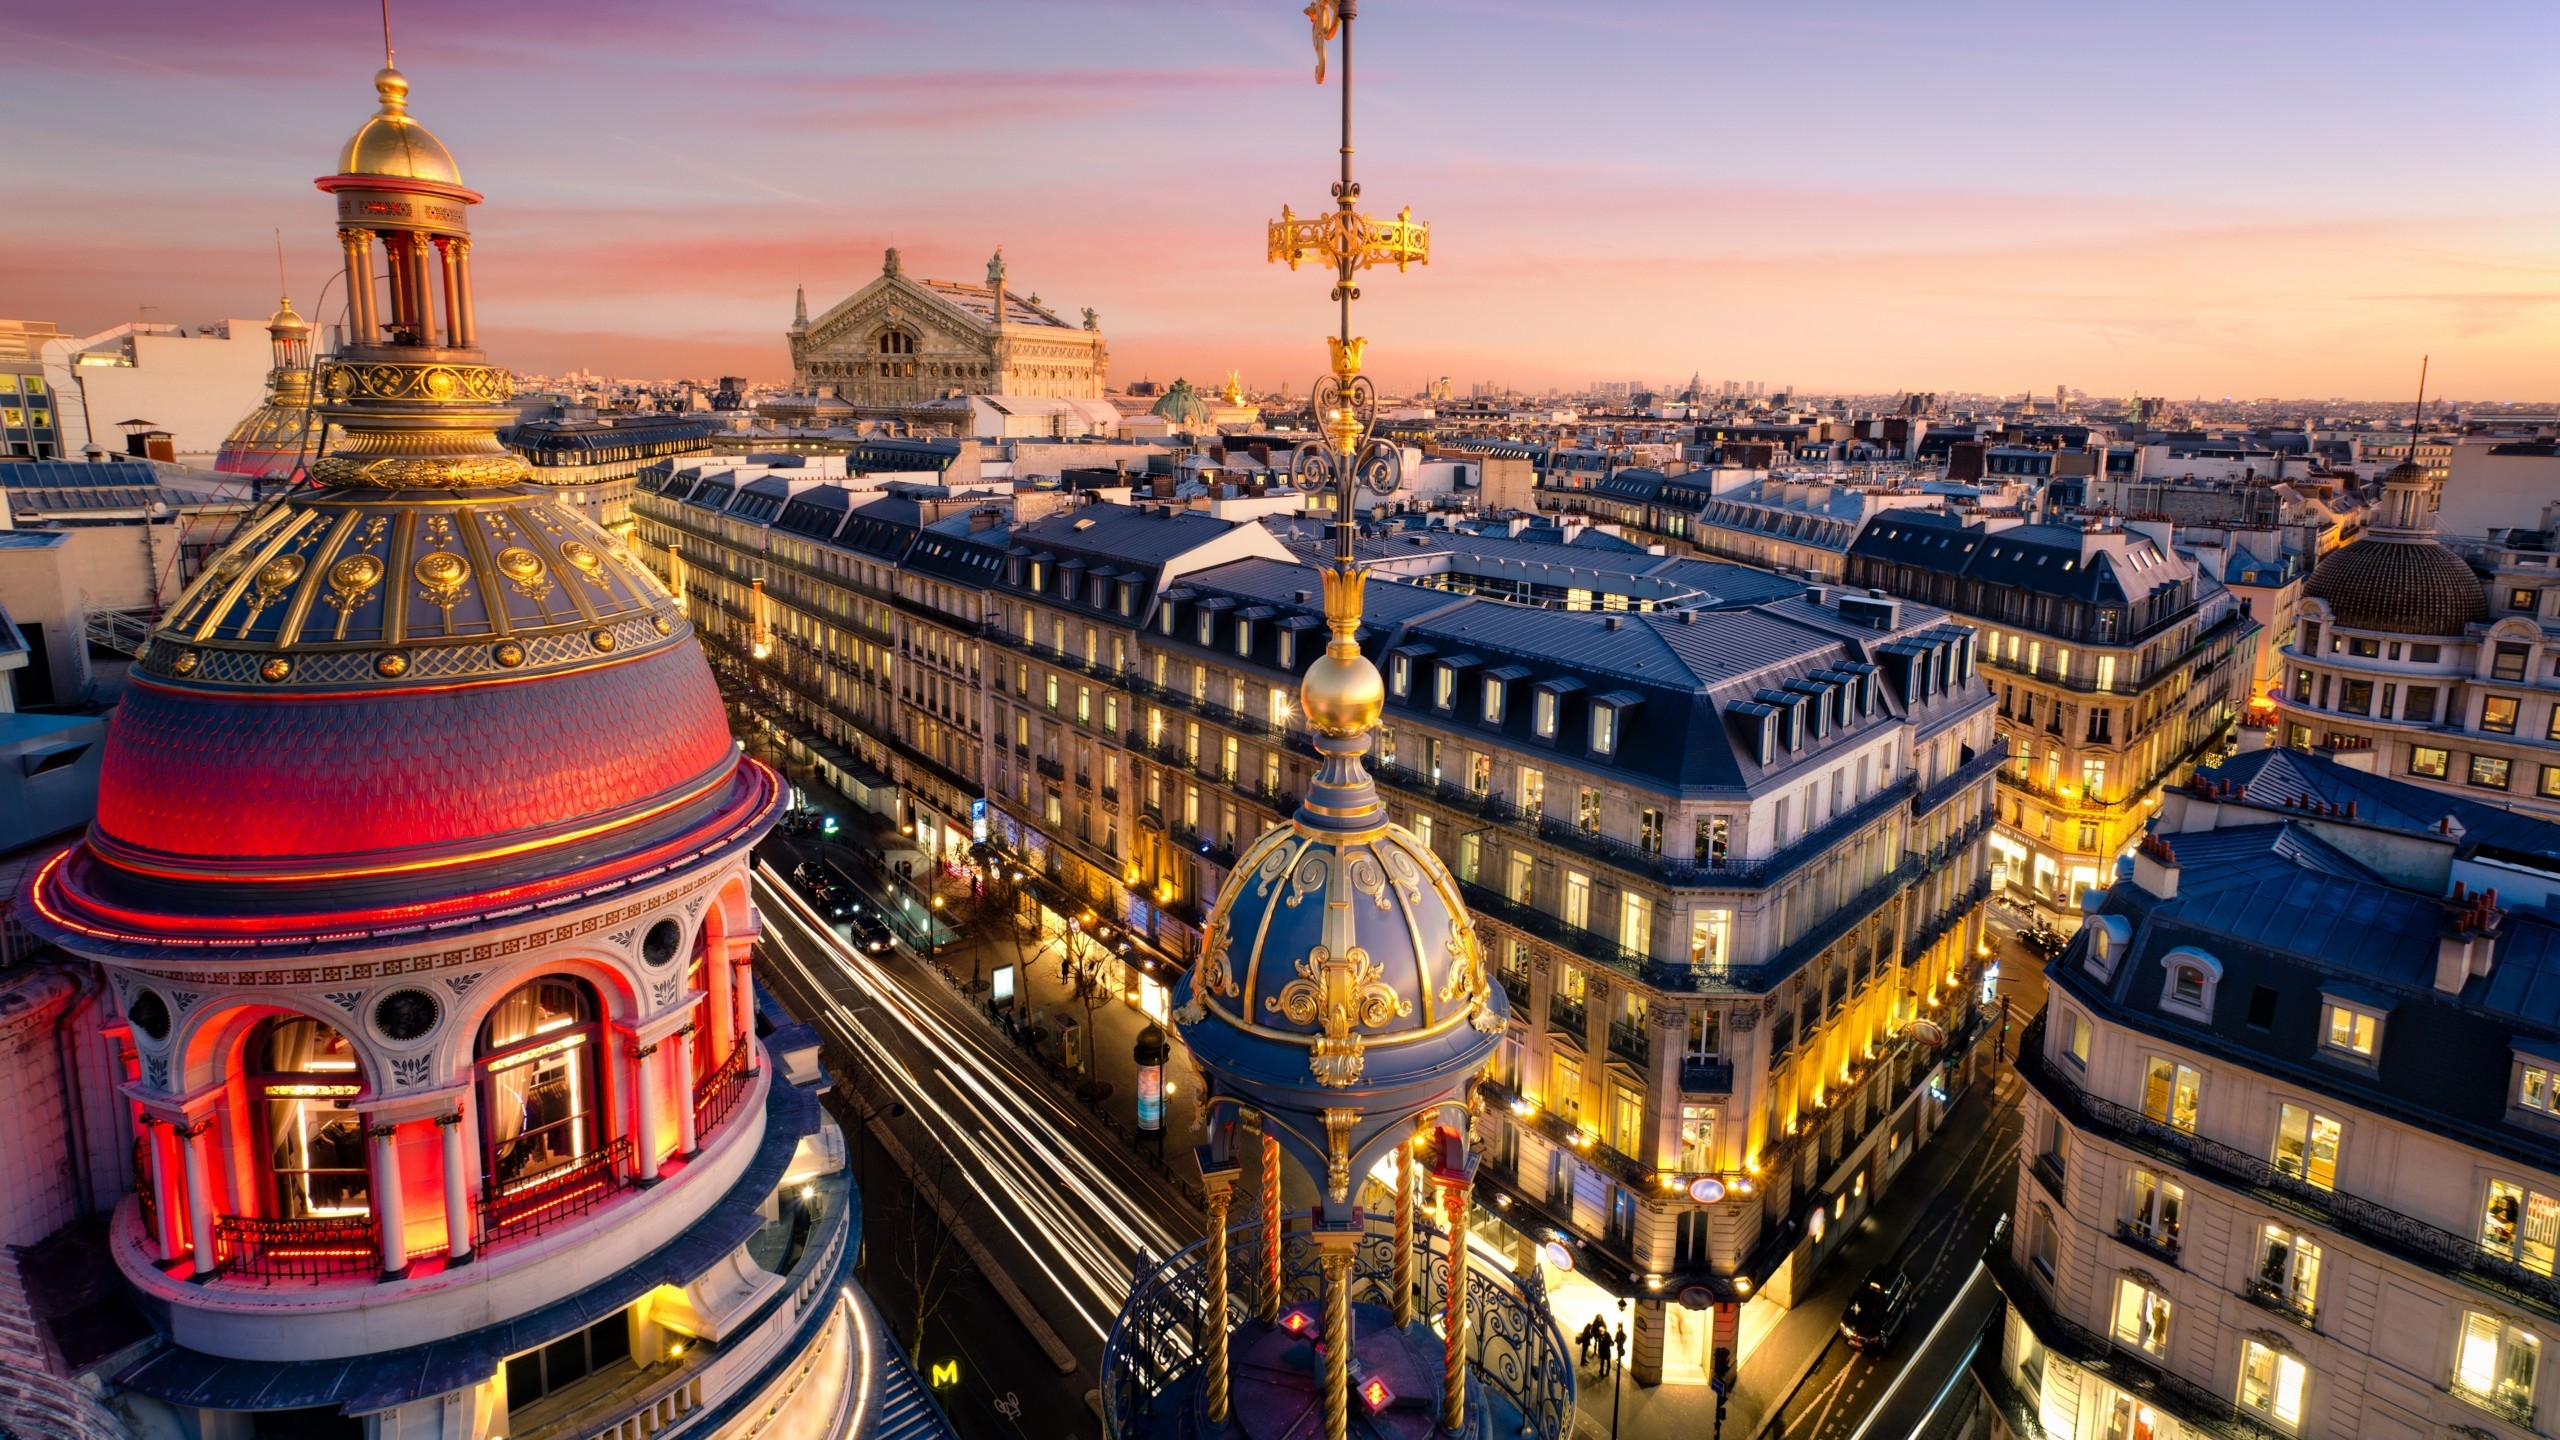 Grand Opera Paris for 2560x1440 HDTV resolution